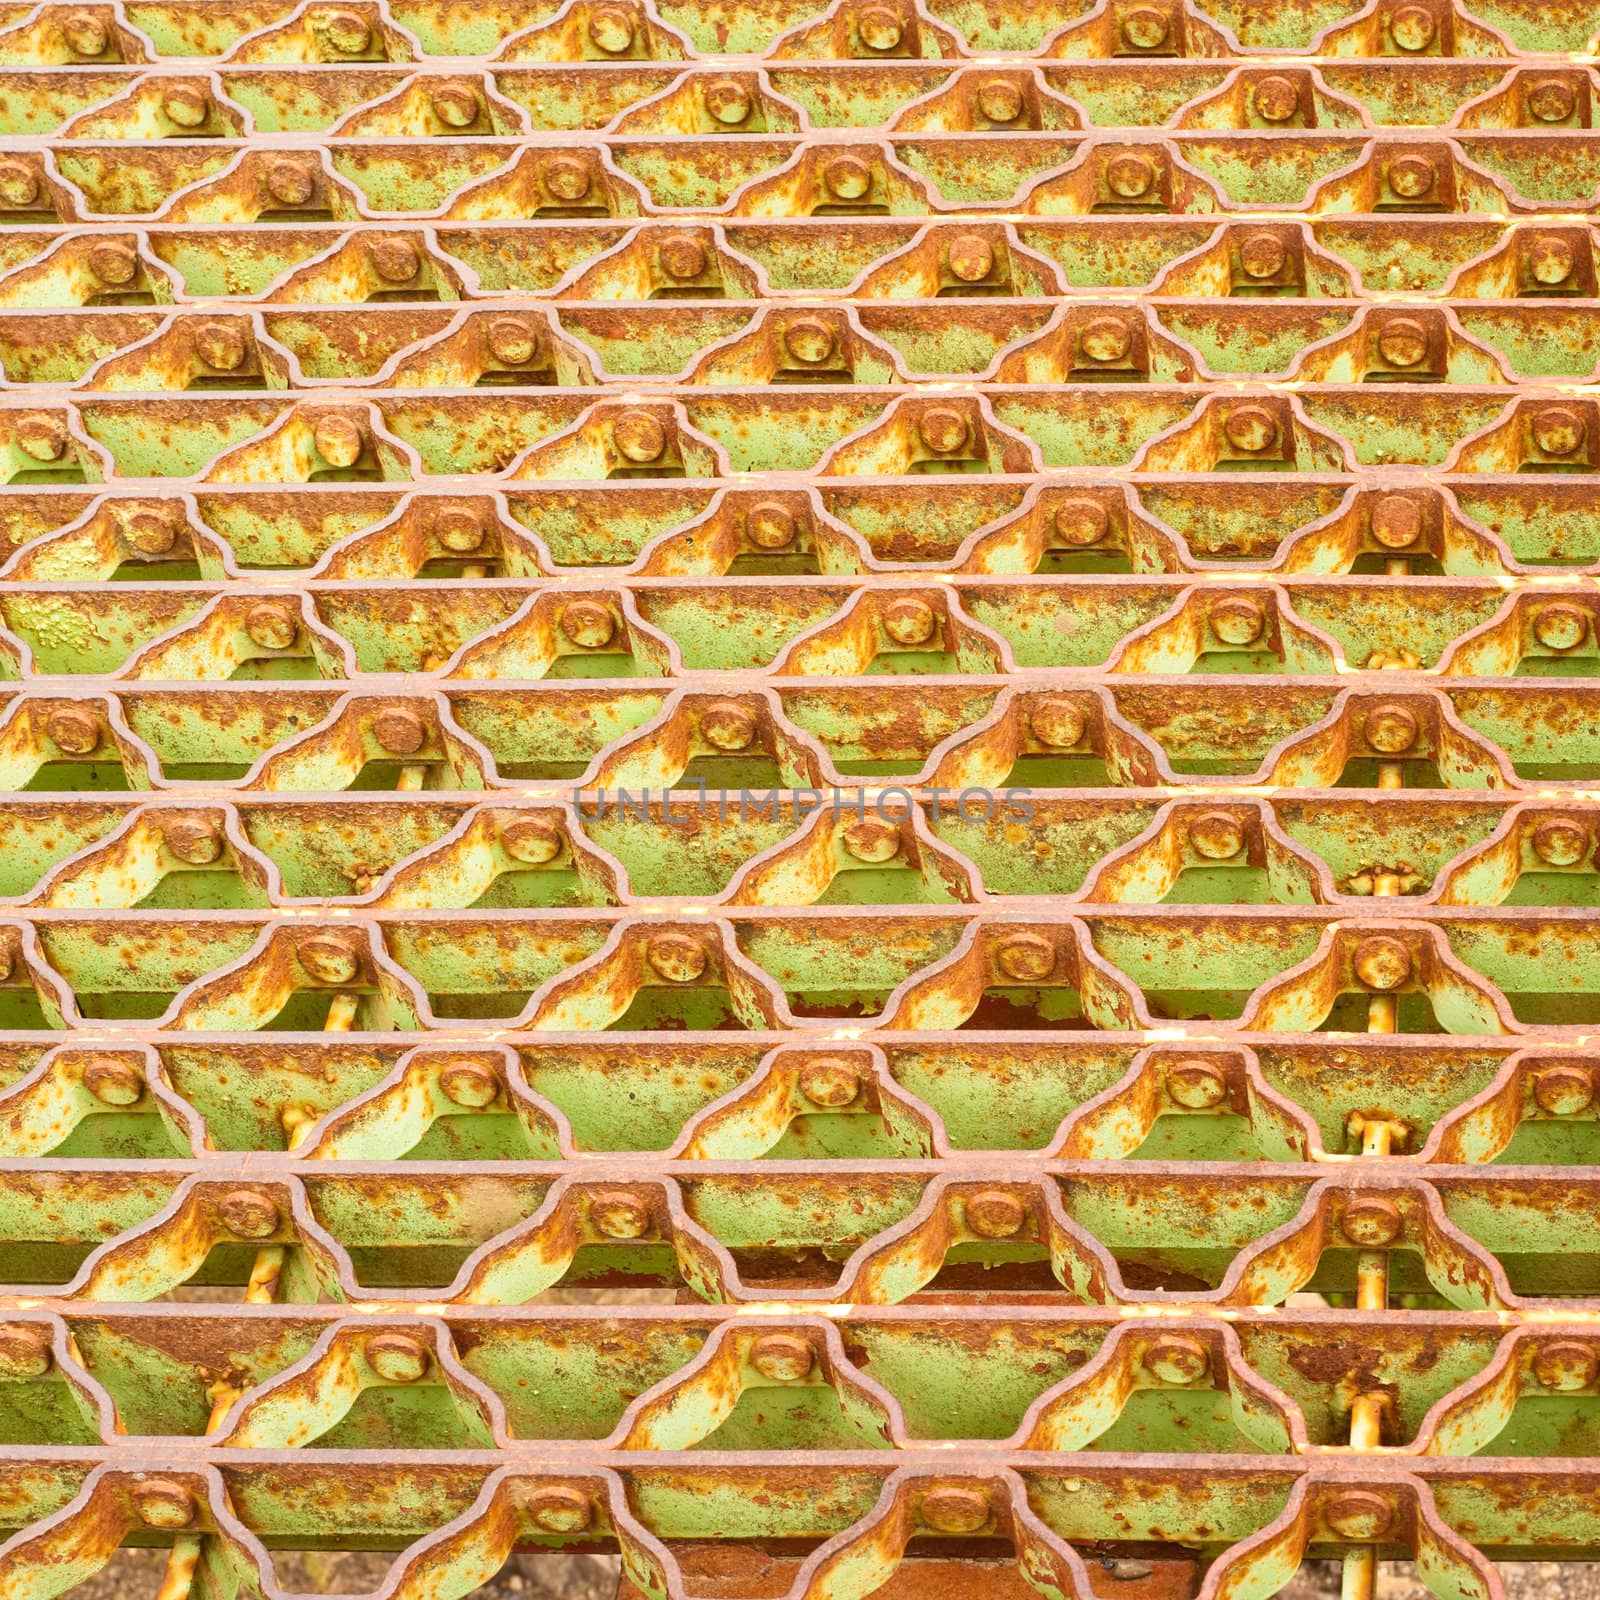 Steel grid floor of old steel bridge background pattern texture